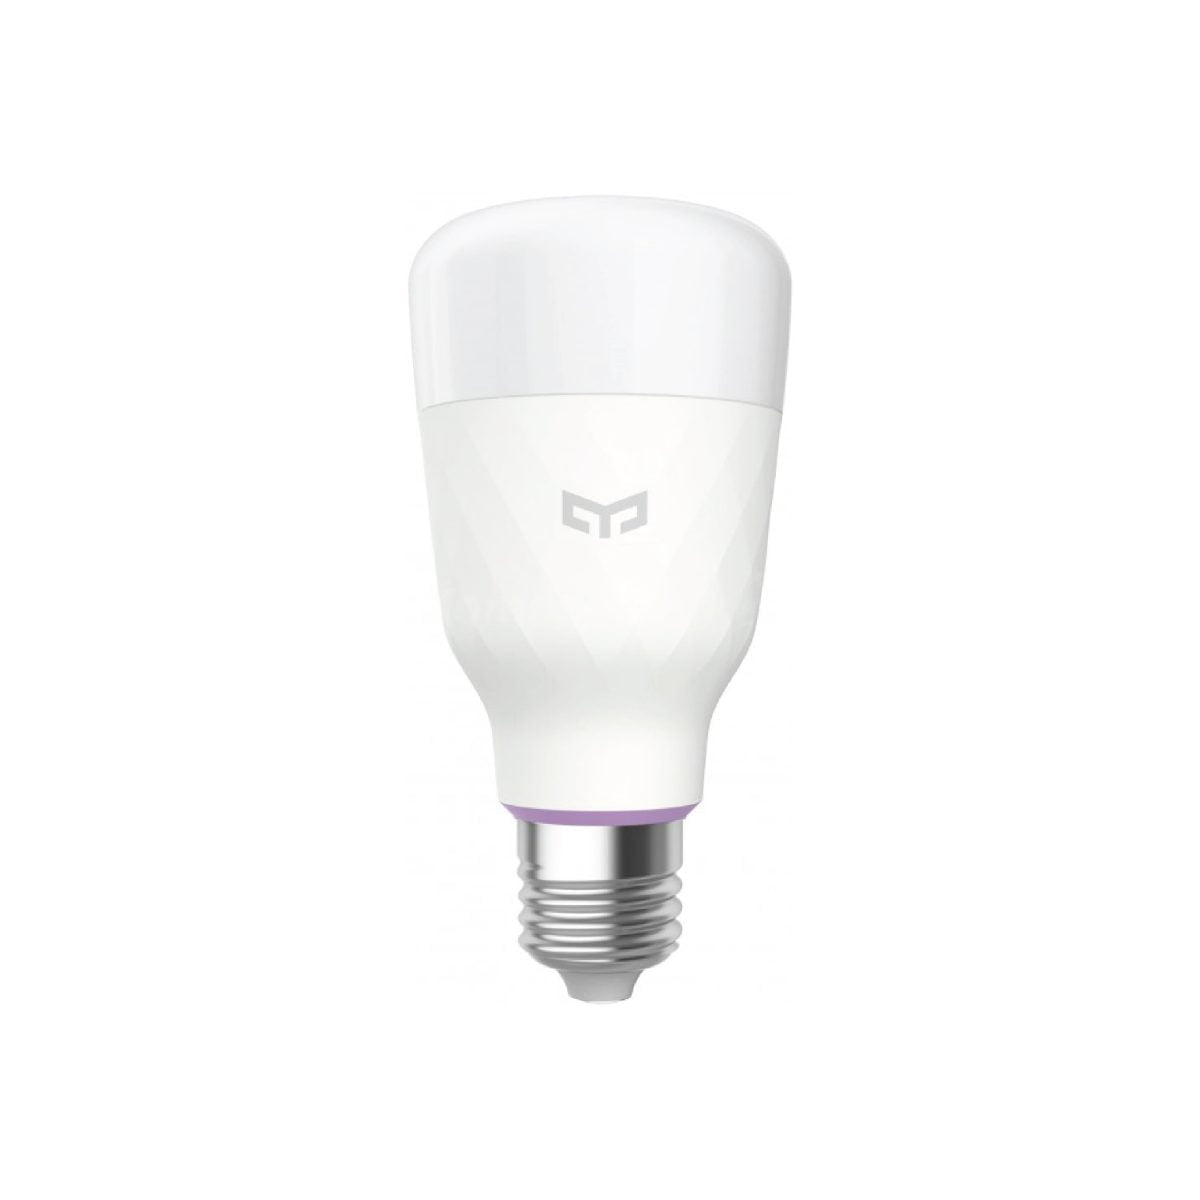 Bulb 26 شاومي سوف تسمح لك لمبة الإضاءة الذكية Yeelight 1S Rgb بإنشاء منزلك الذكي الخاص. يمكنك التحكم فيه بصوتك أو تطبيقك وتحديد درجة الحرارة والقوة التي يجب أن يلمع بها. التدفق الضوئي: 800 لومن درجة حرارة اللون: 1700 K-6500K حامل المصباح: E27 الطاقة المقدرة: 8.5 واط &Nbsp; 16 مليون لون مع تمكين Wifi والتحكم الصوتي والتحكم في التطبيقات ومزامنة الموسيقى &Lt;Img Class=&Quot;Alignnone Wp-Image-8061 Size-Full&Quot; Src=&Quot;Https://Lablaab.com/Wp-Content/Uploads/2020/04/Bulb-27-2-Scaled.jpg&Quot; Alt=&Quot;&Quot; Width=&Quot;2560&Quot; Height=&Quot;357&Quot;&Gt; &Nbsp; لمبة يلايت الذكية 1S (ألوان)